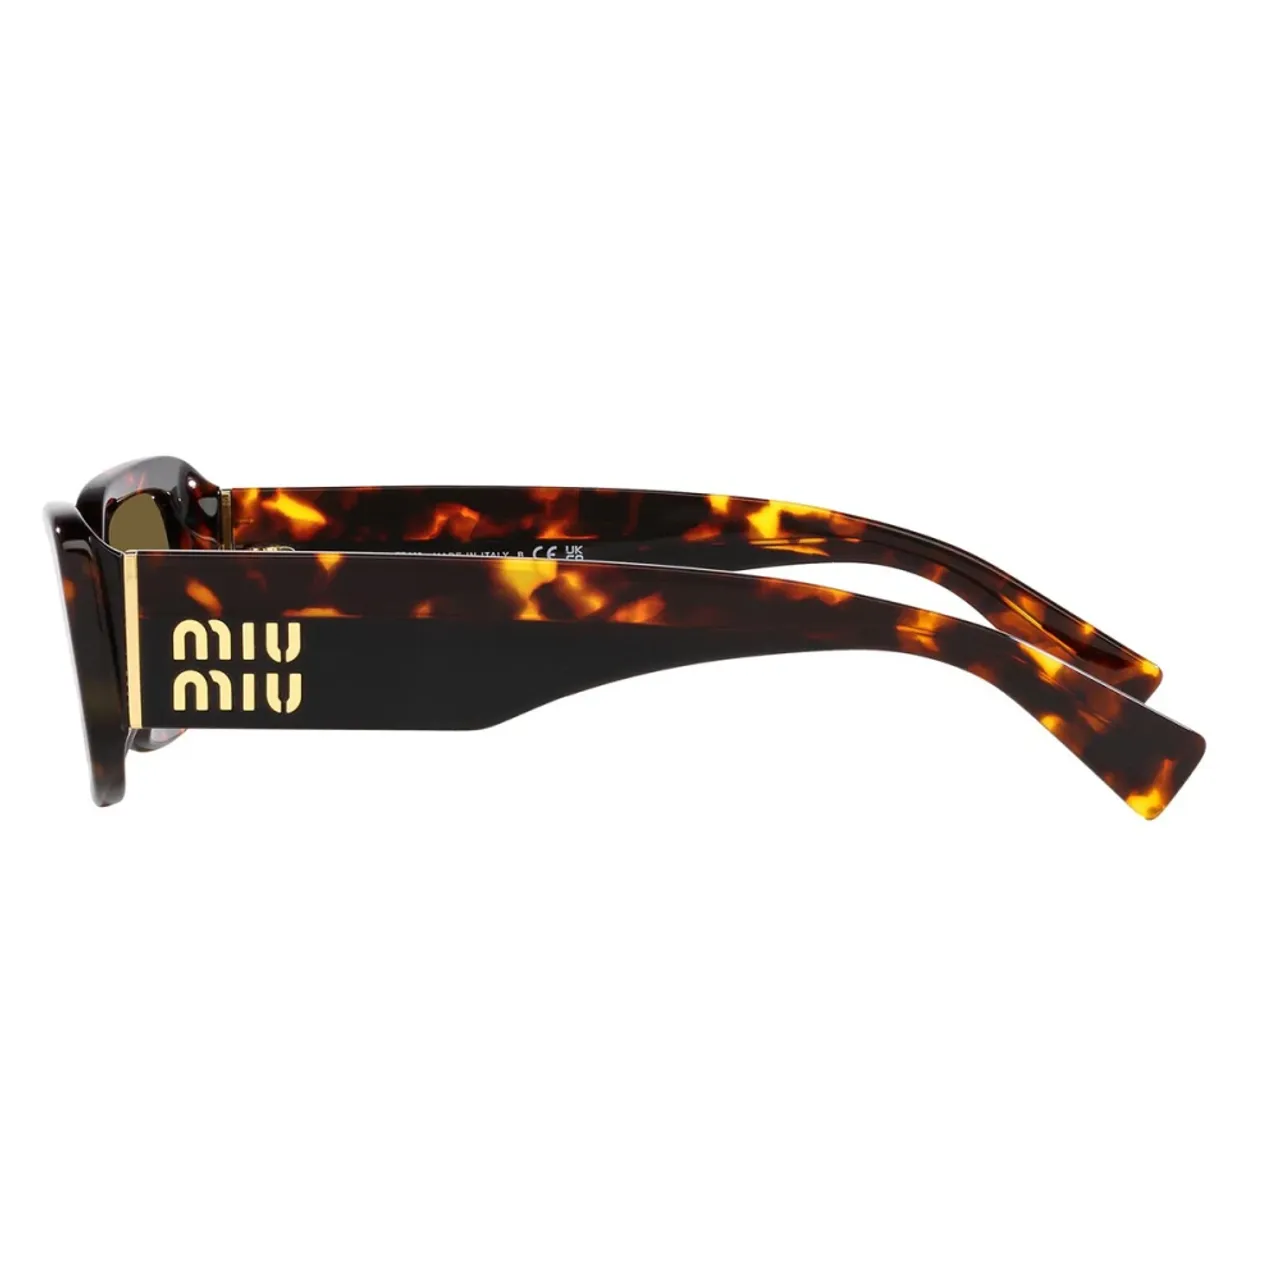 Trendige Rechteckige Sonnenbrille mit Havana-Honig Gestell Miu Miu